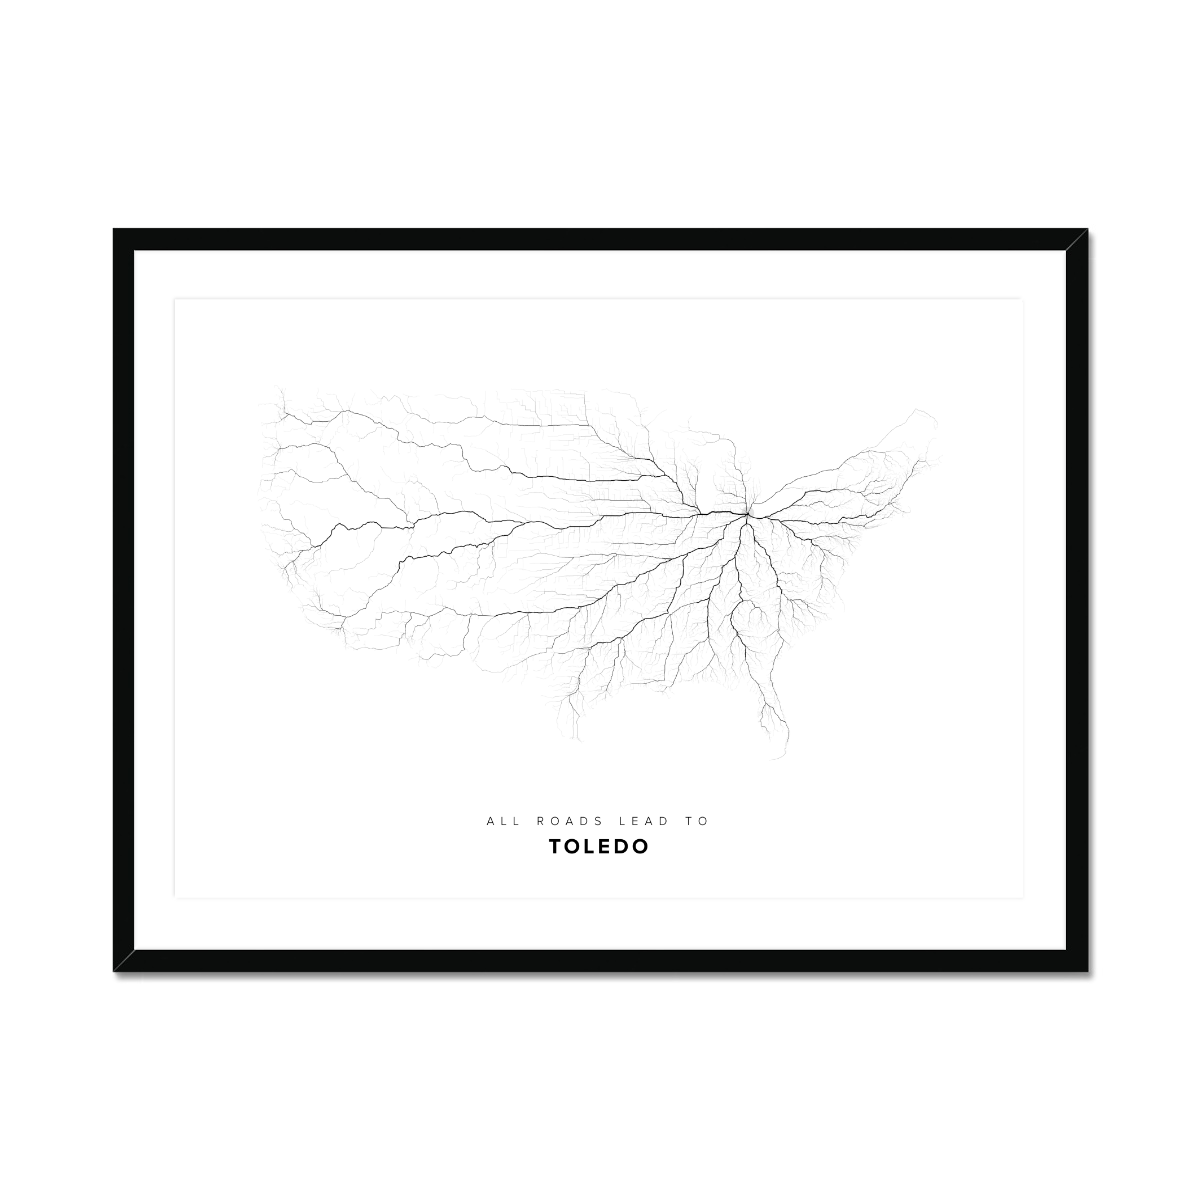 All roads lead to Toledo (United States of America) Fine Art Map Print